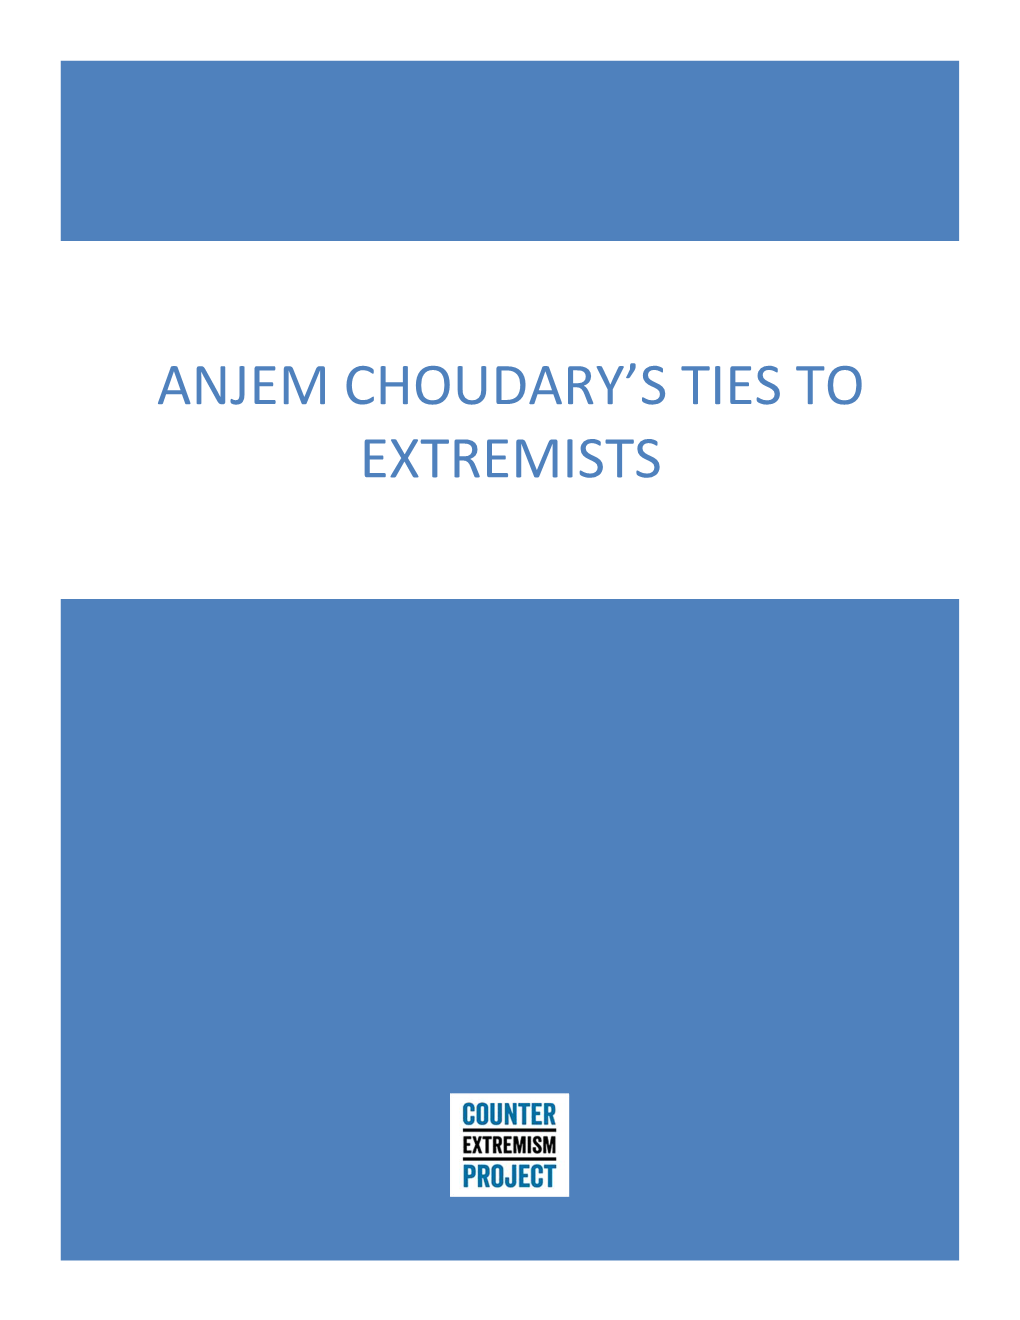 Anjem Choudary's Ties to Extremists